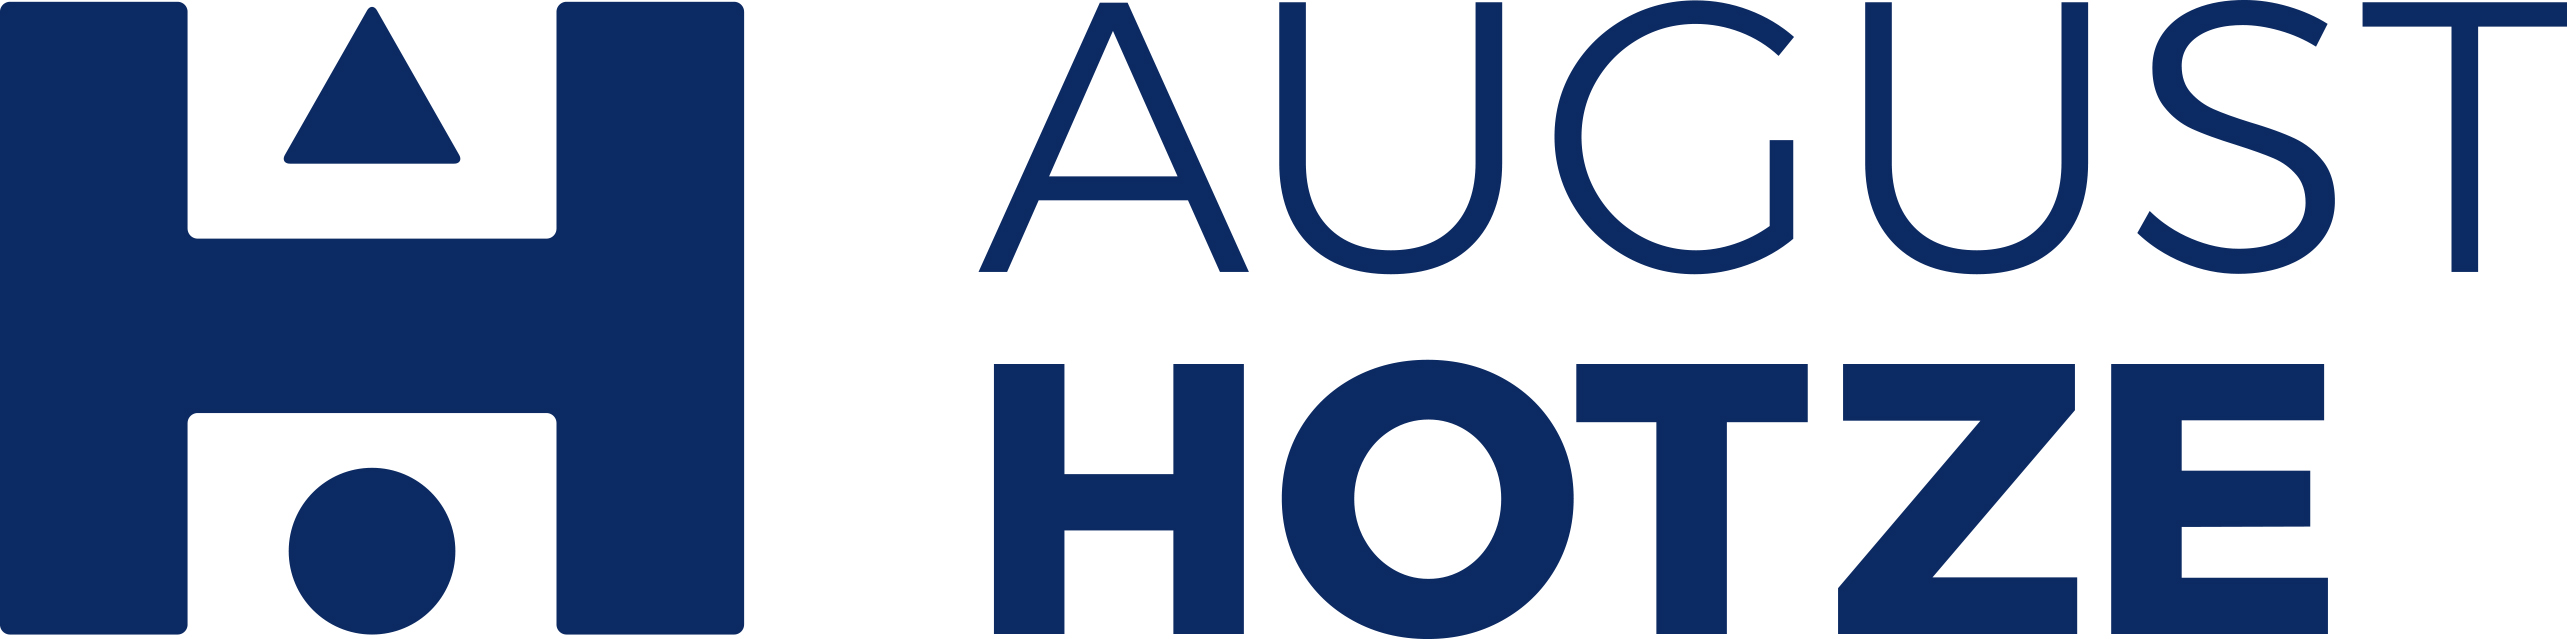 August Hotze GmbH & Co. KG